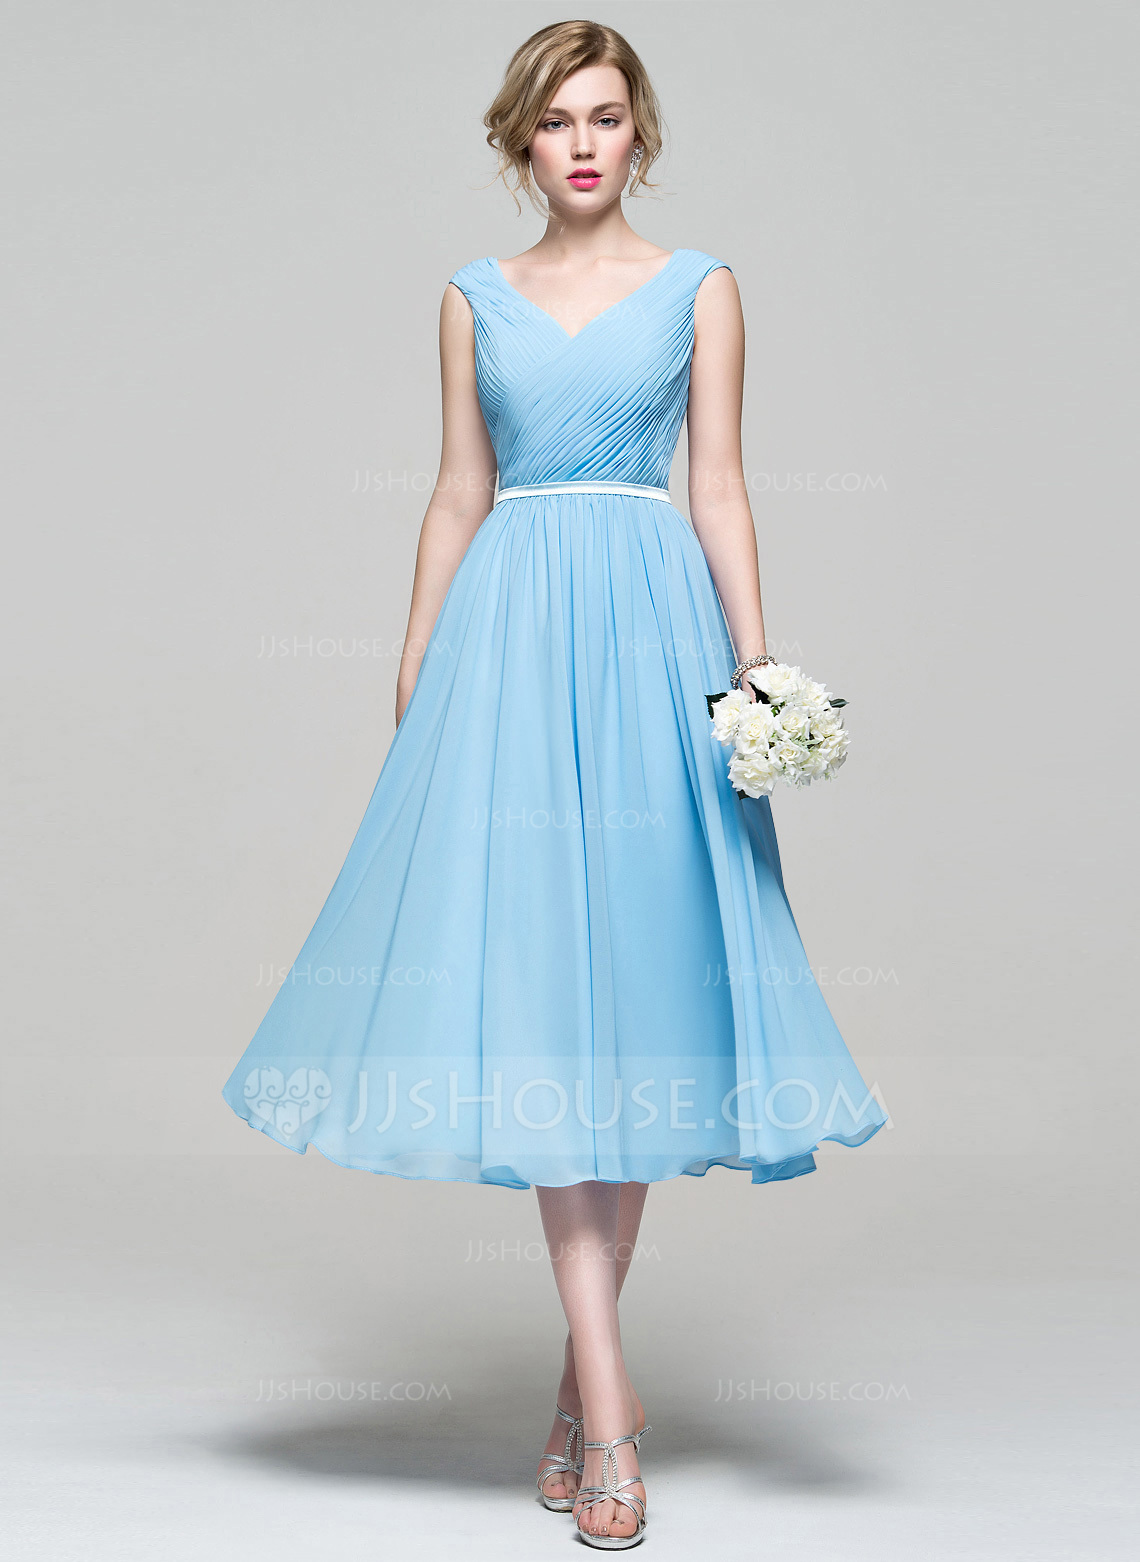 tea length dresses a-line/princess v-neck tea-length chiffon bridesmaid dress with ruffle.  loading zoom vpshbnj